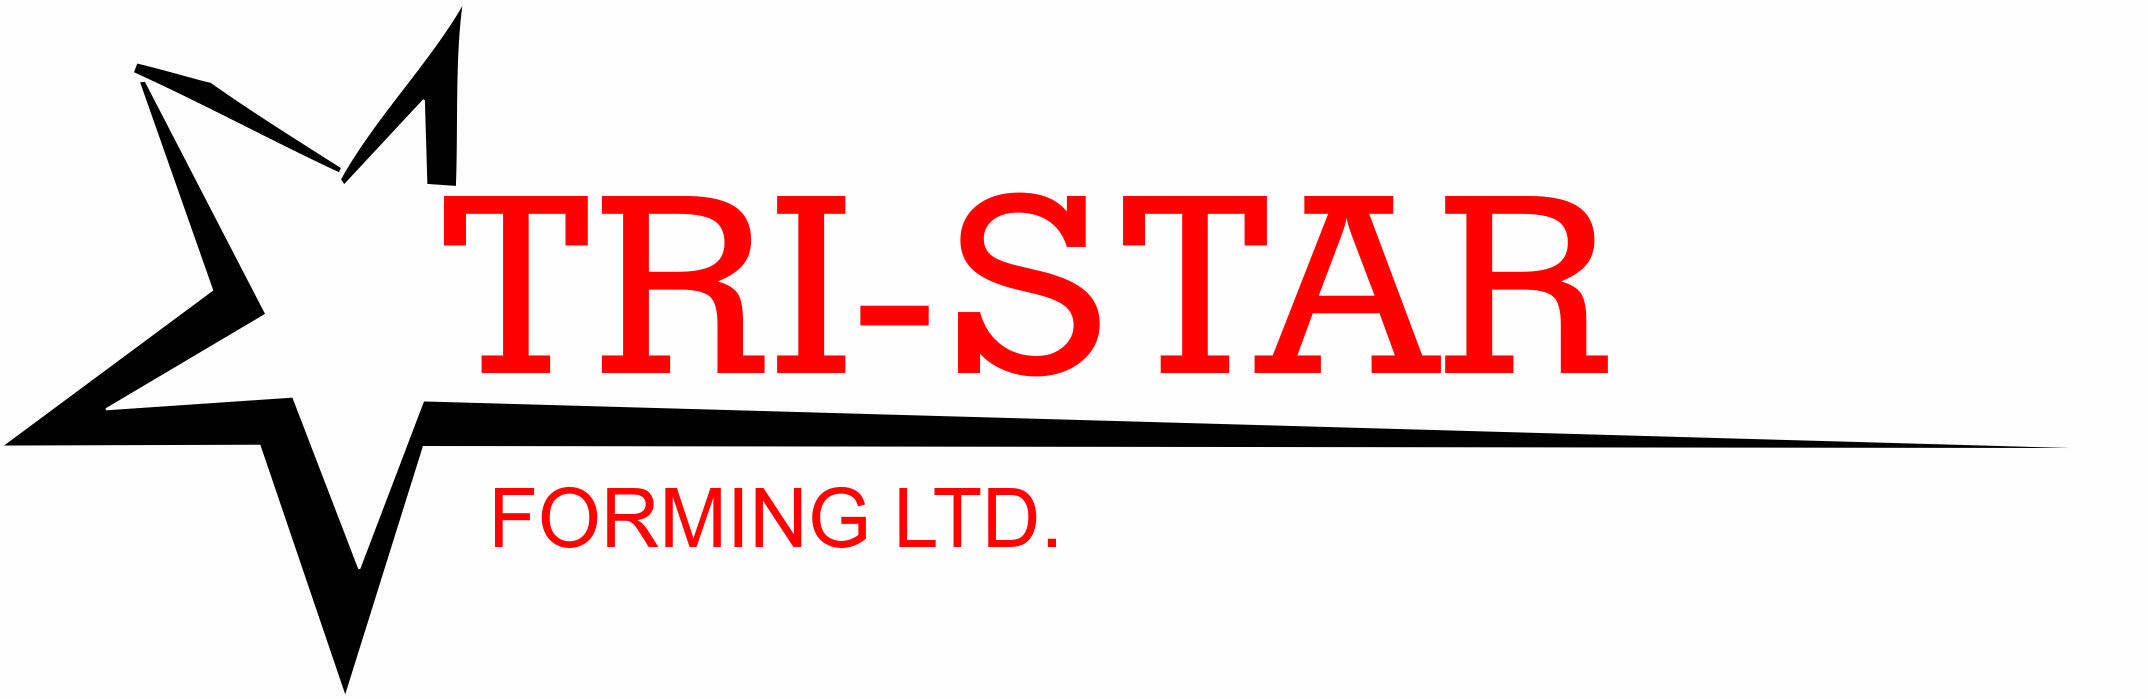 Tri-Star Forming Ltd.